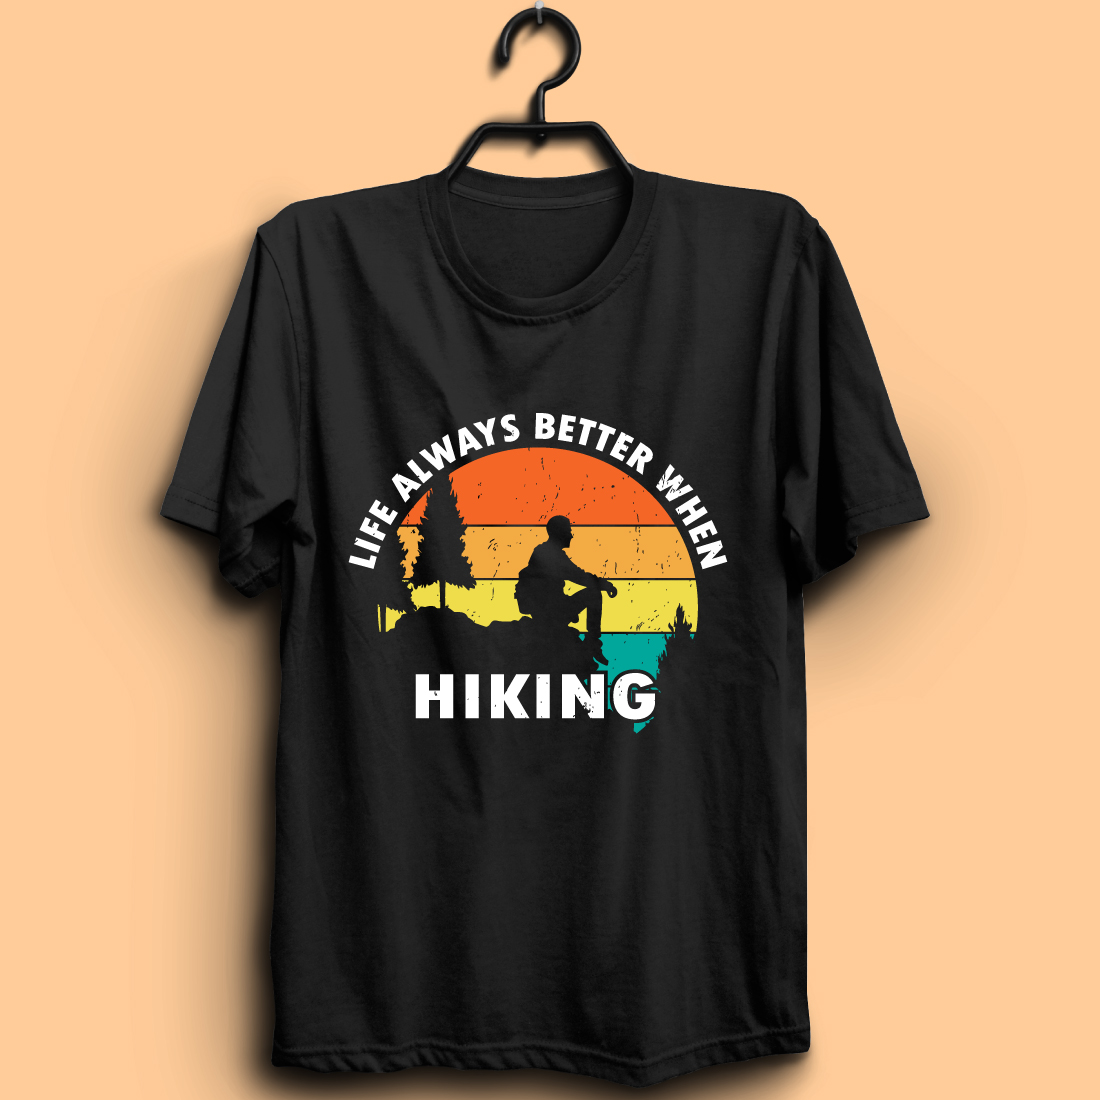 hiking t shirt design01 5